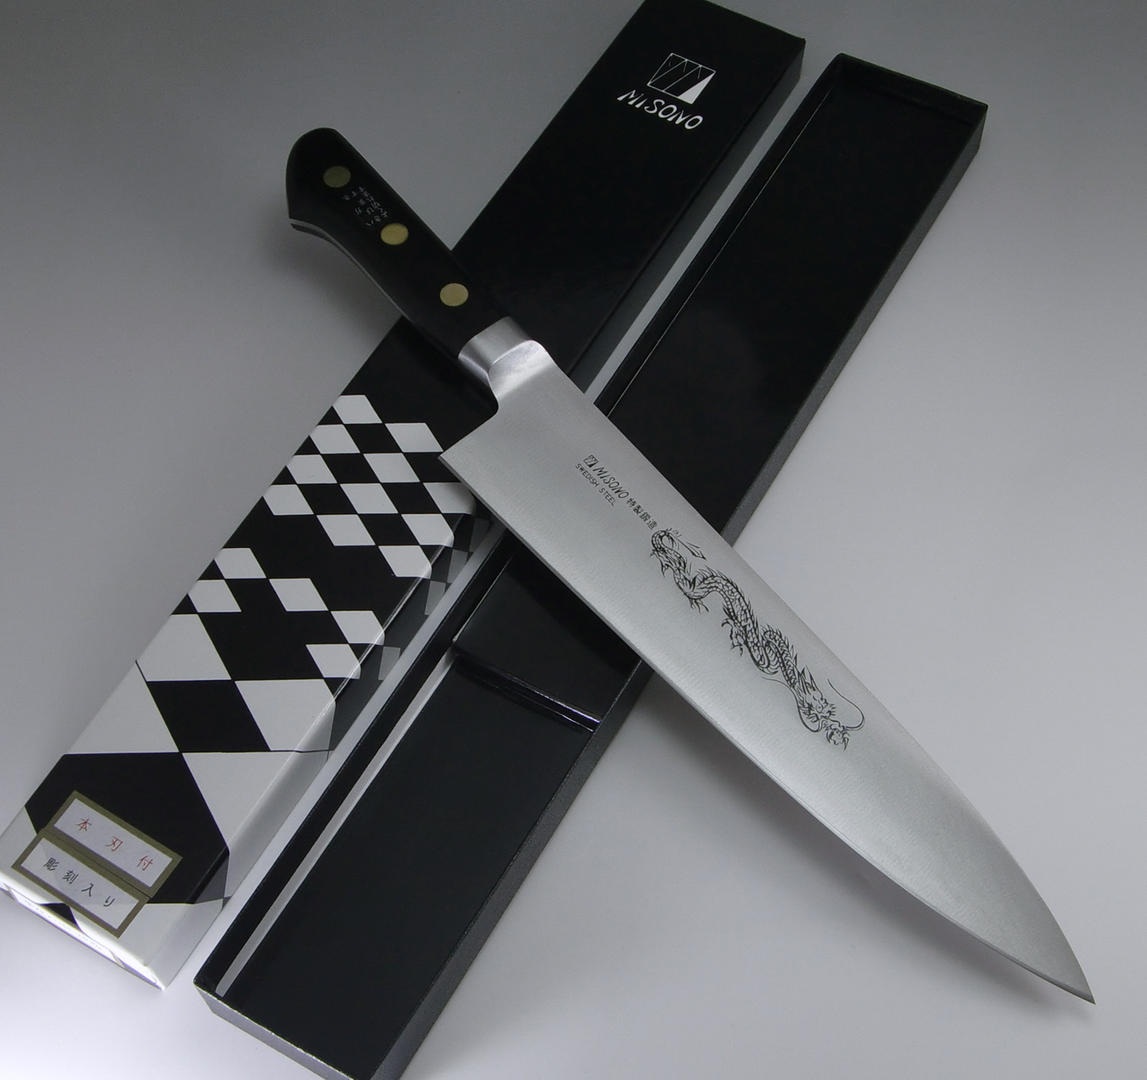 BBQ Dragon German Steel 8” Professional Chef Knife